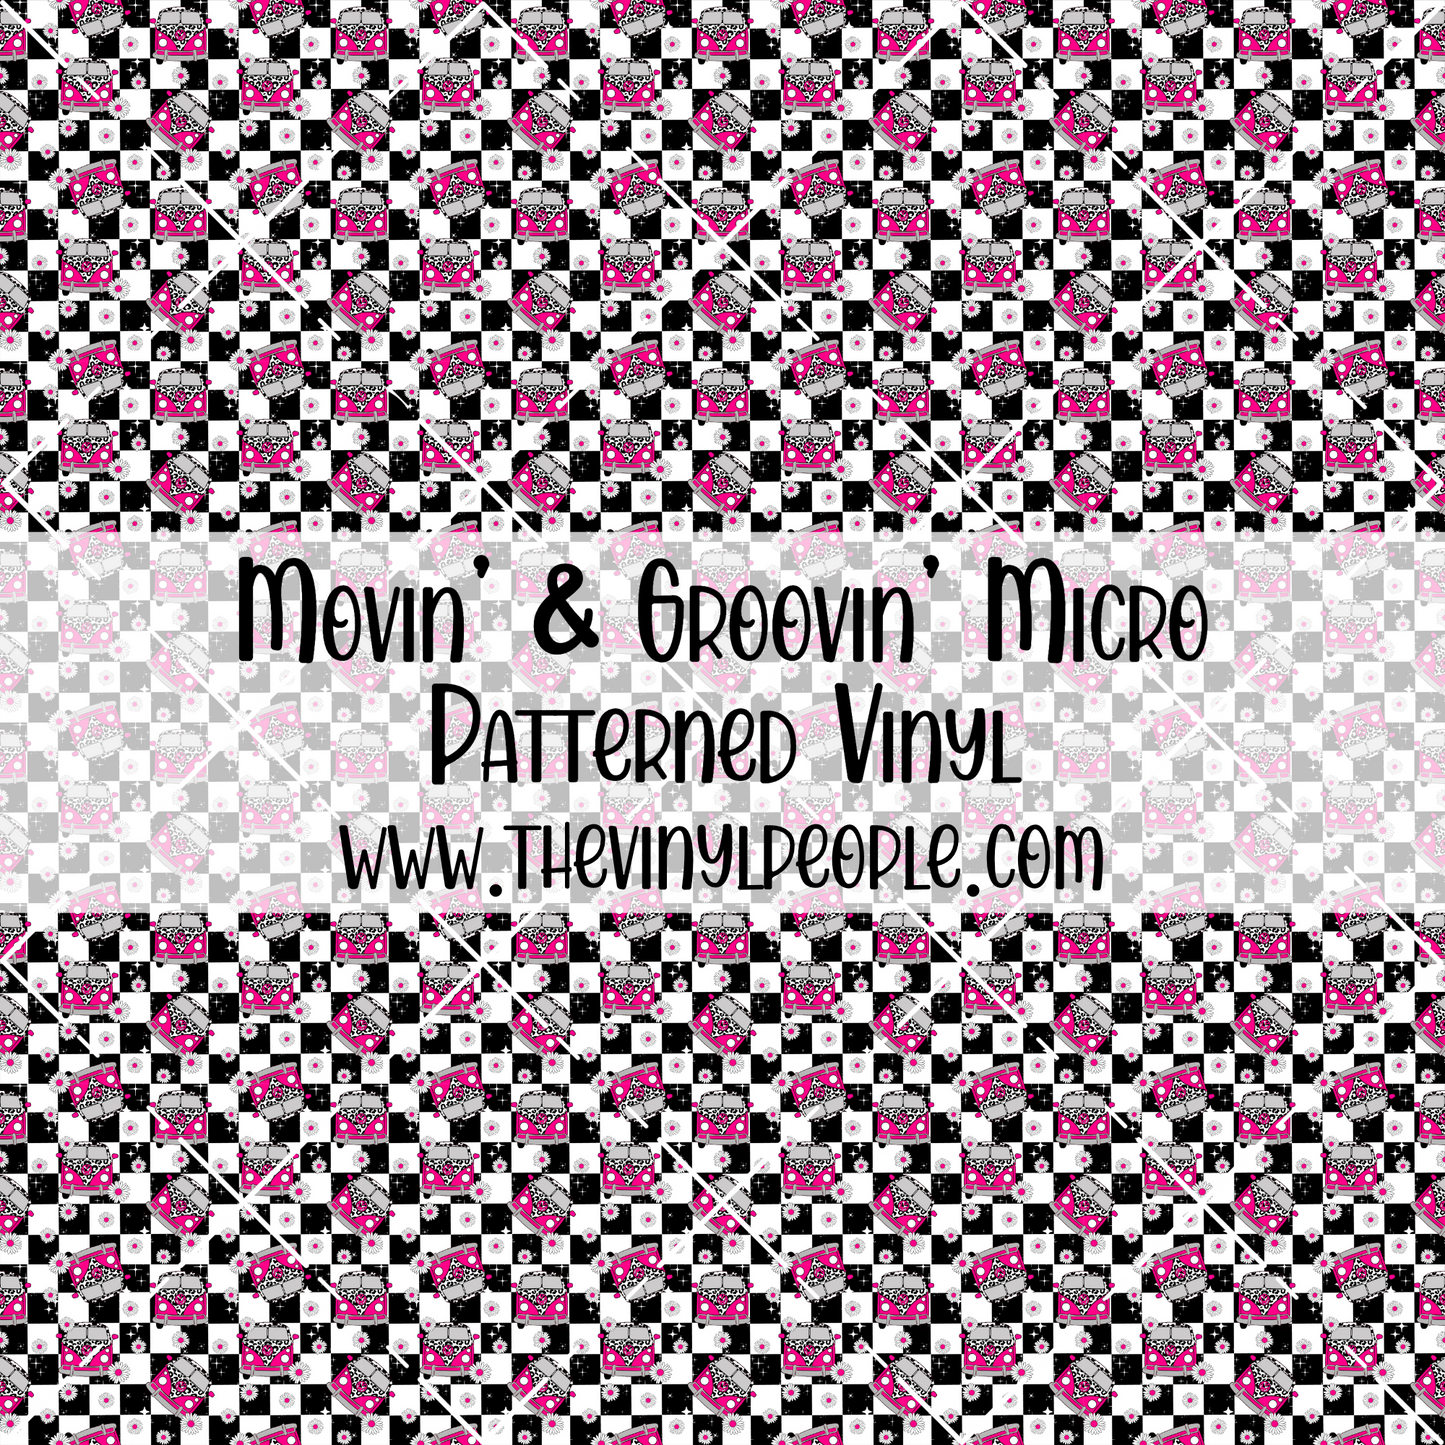 Movin' & Groovin' Patterned Vinyl